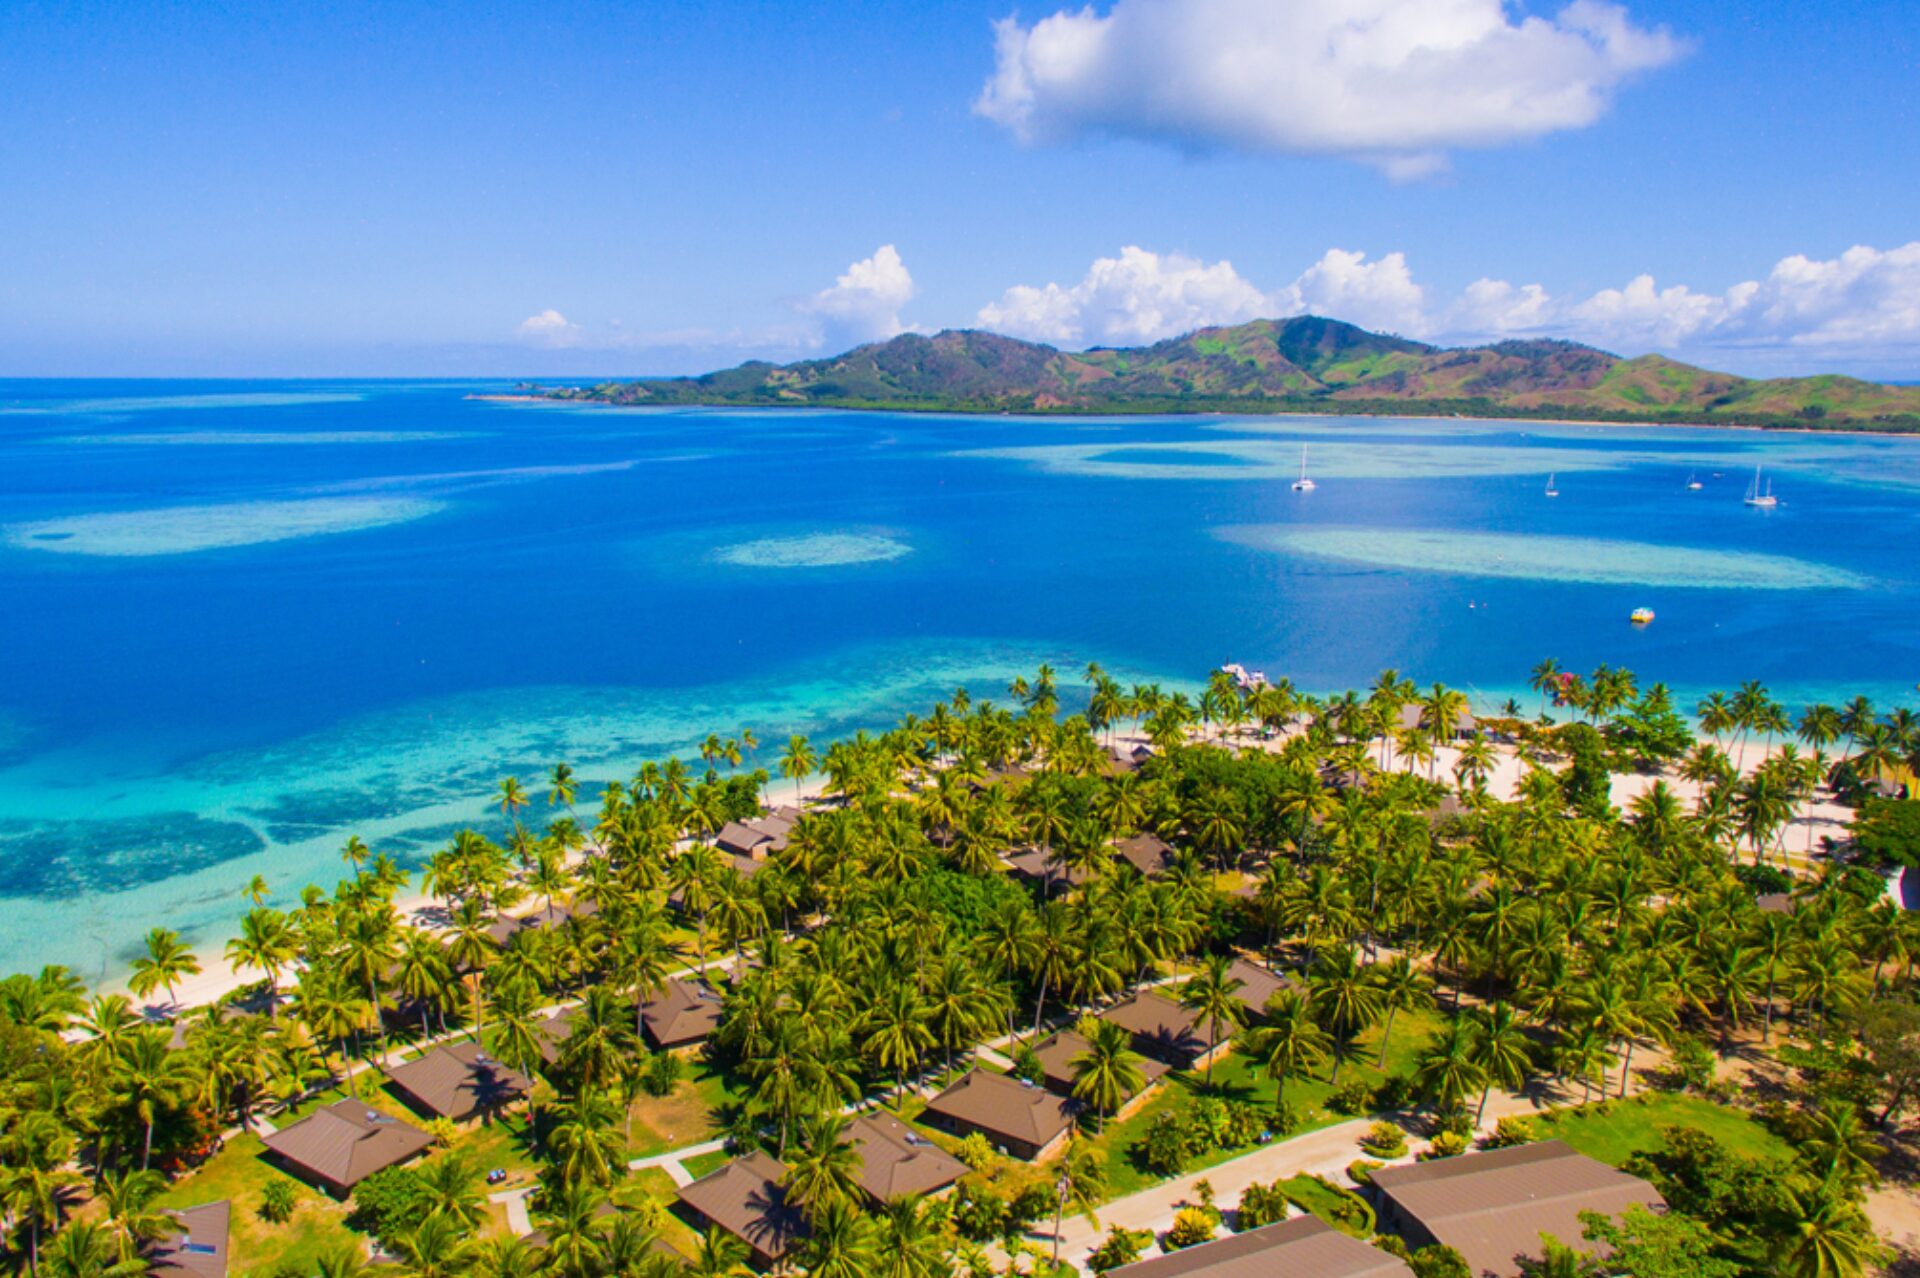 Plantation Island Resort in Fiji has it All